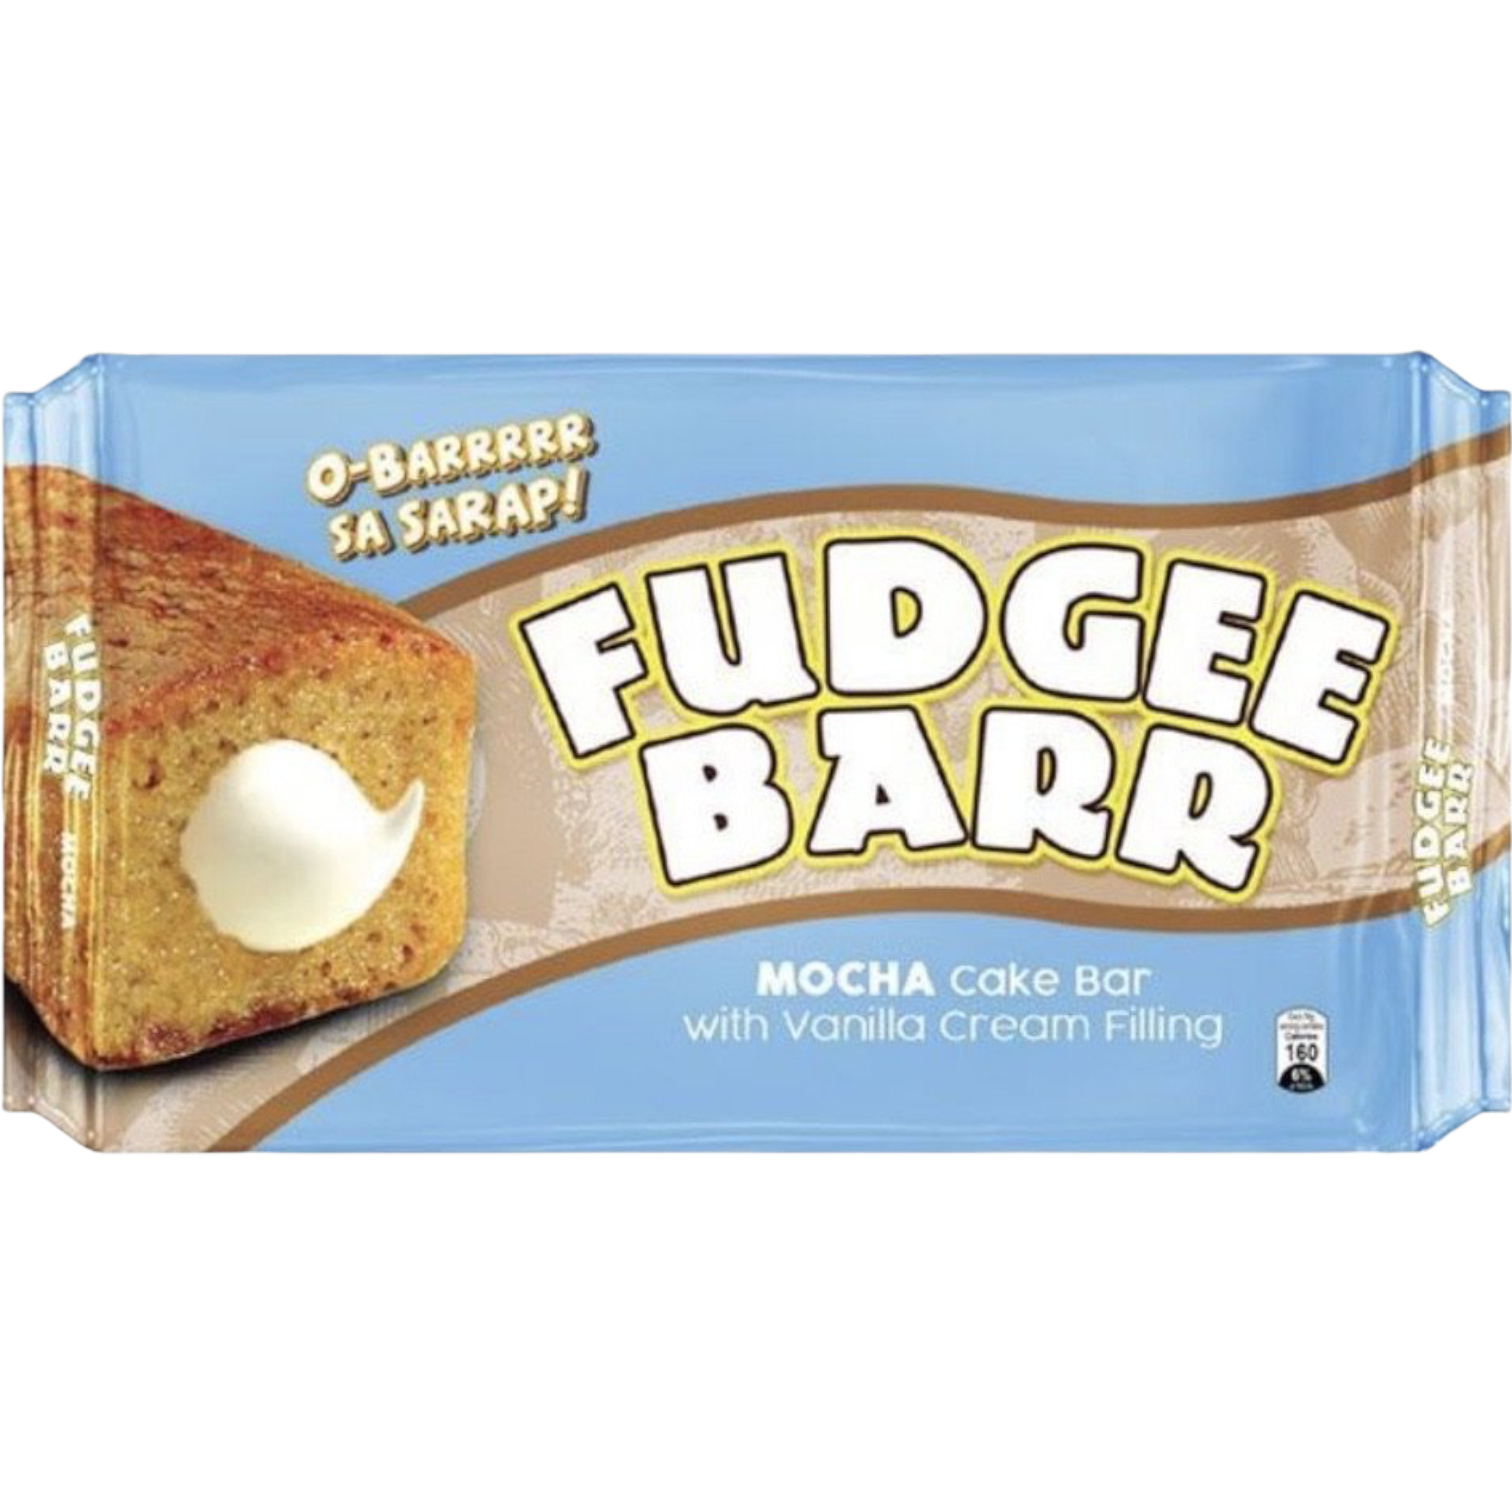 Buy Rebisco Fudge Bar Mocha Rage 10's from Pandamart - QC East online on  foodpanda